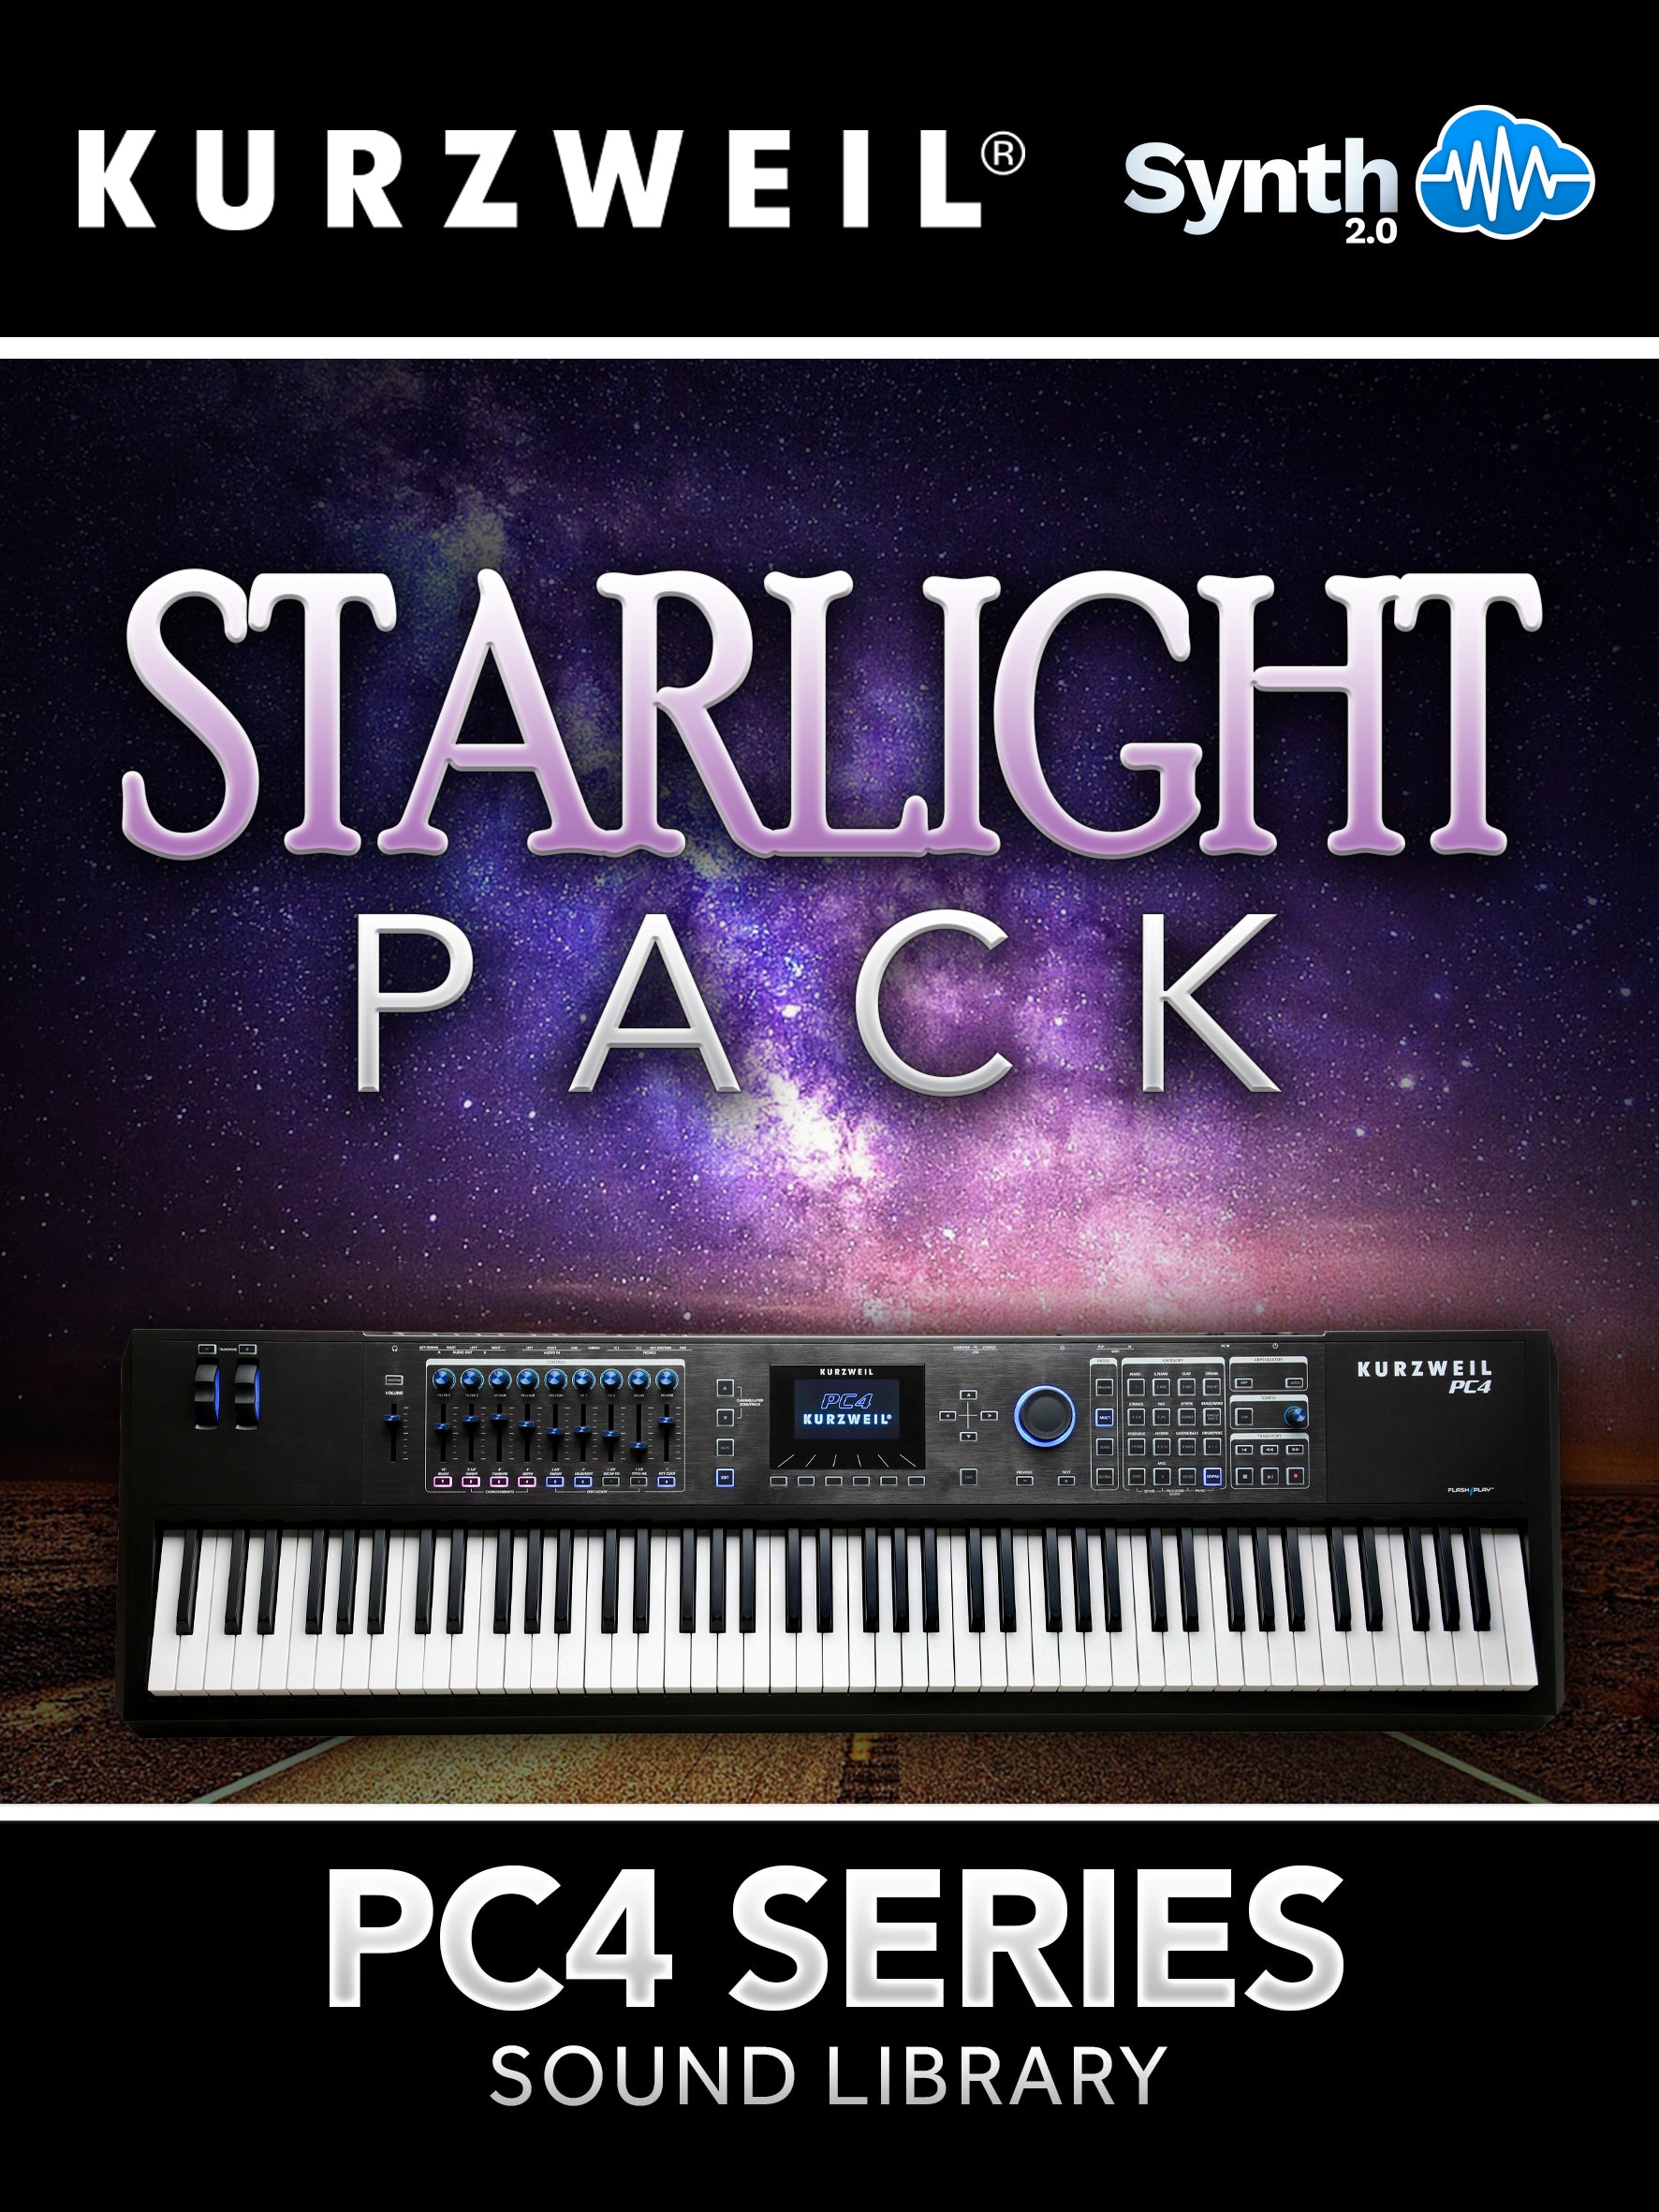 PC4033 - SC Sounds Free Vol.7 - Muse Starlight Pack - Kurzweil PC4 Series ( 43 presets )